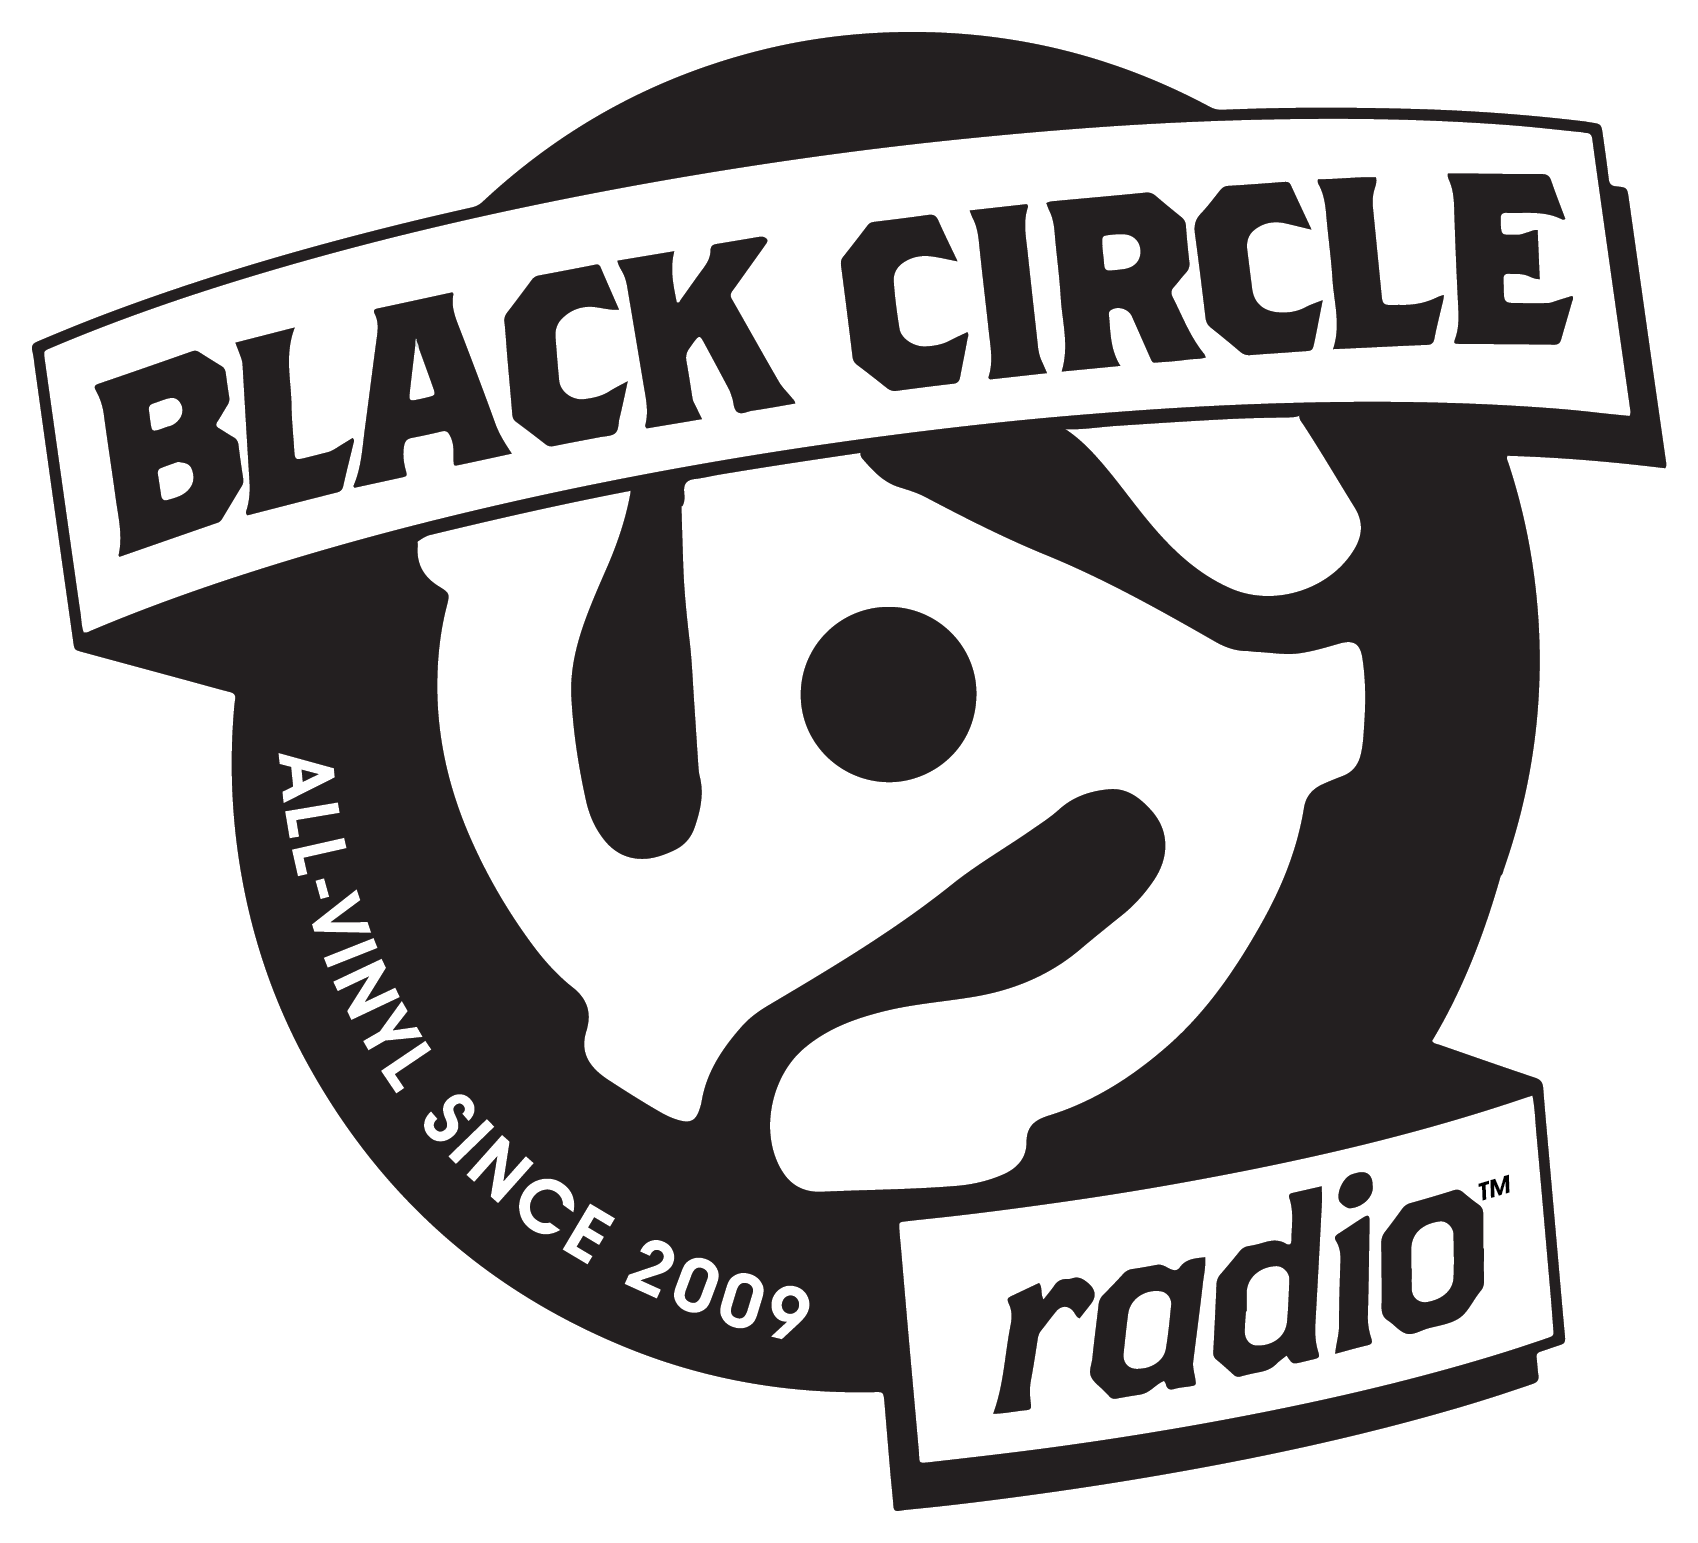 Black Circle Radio